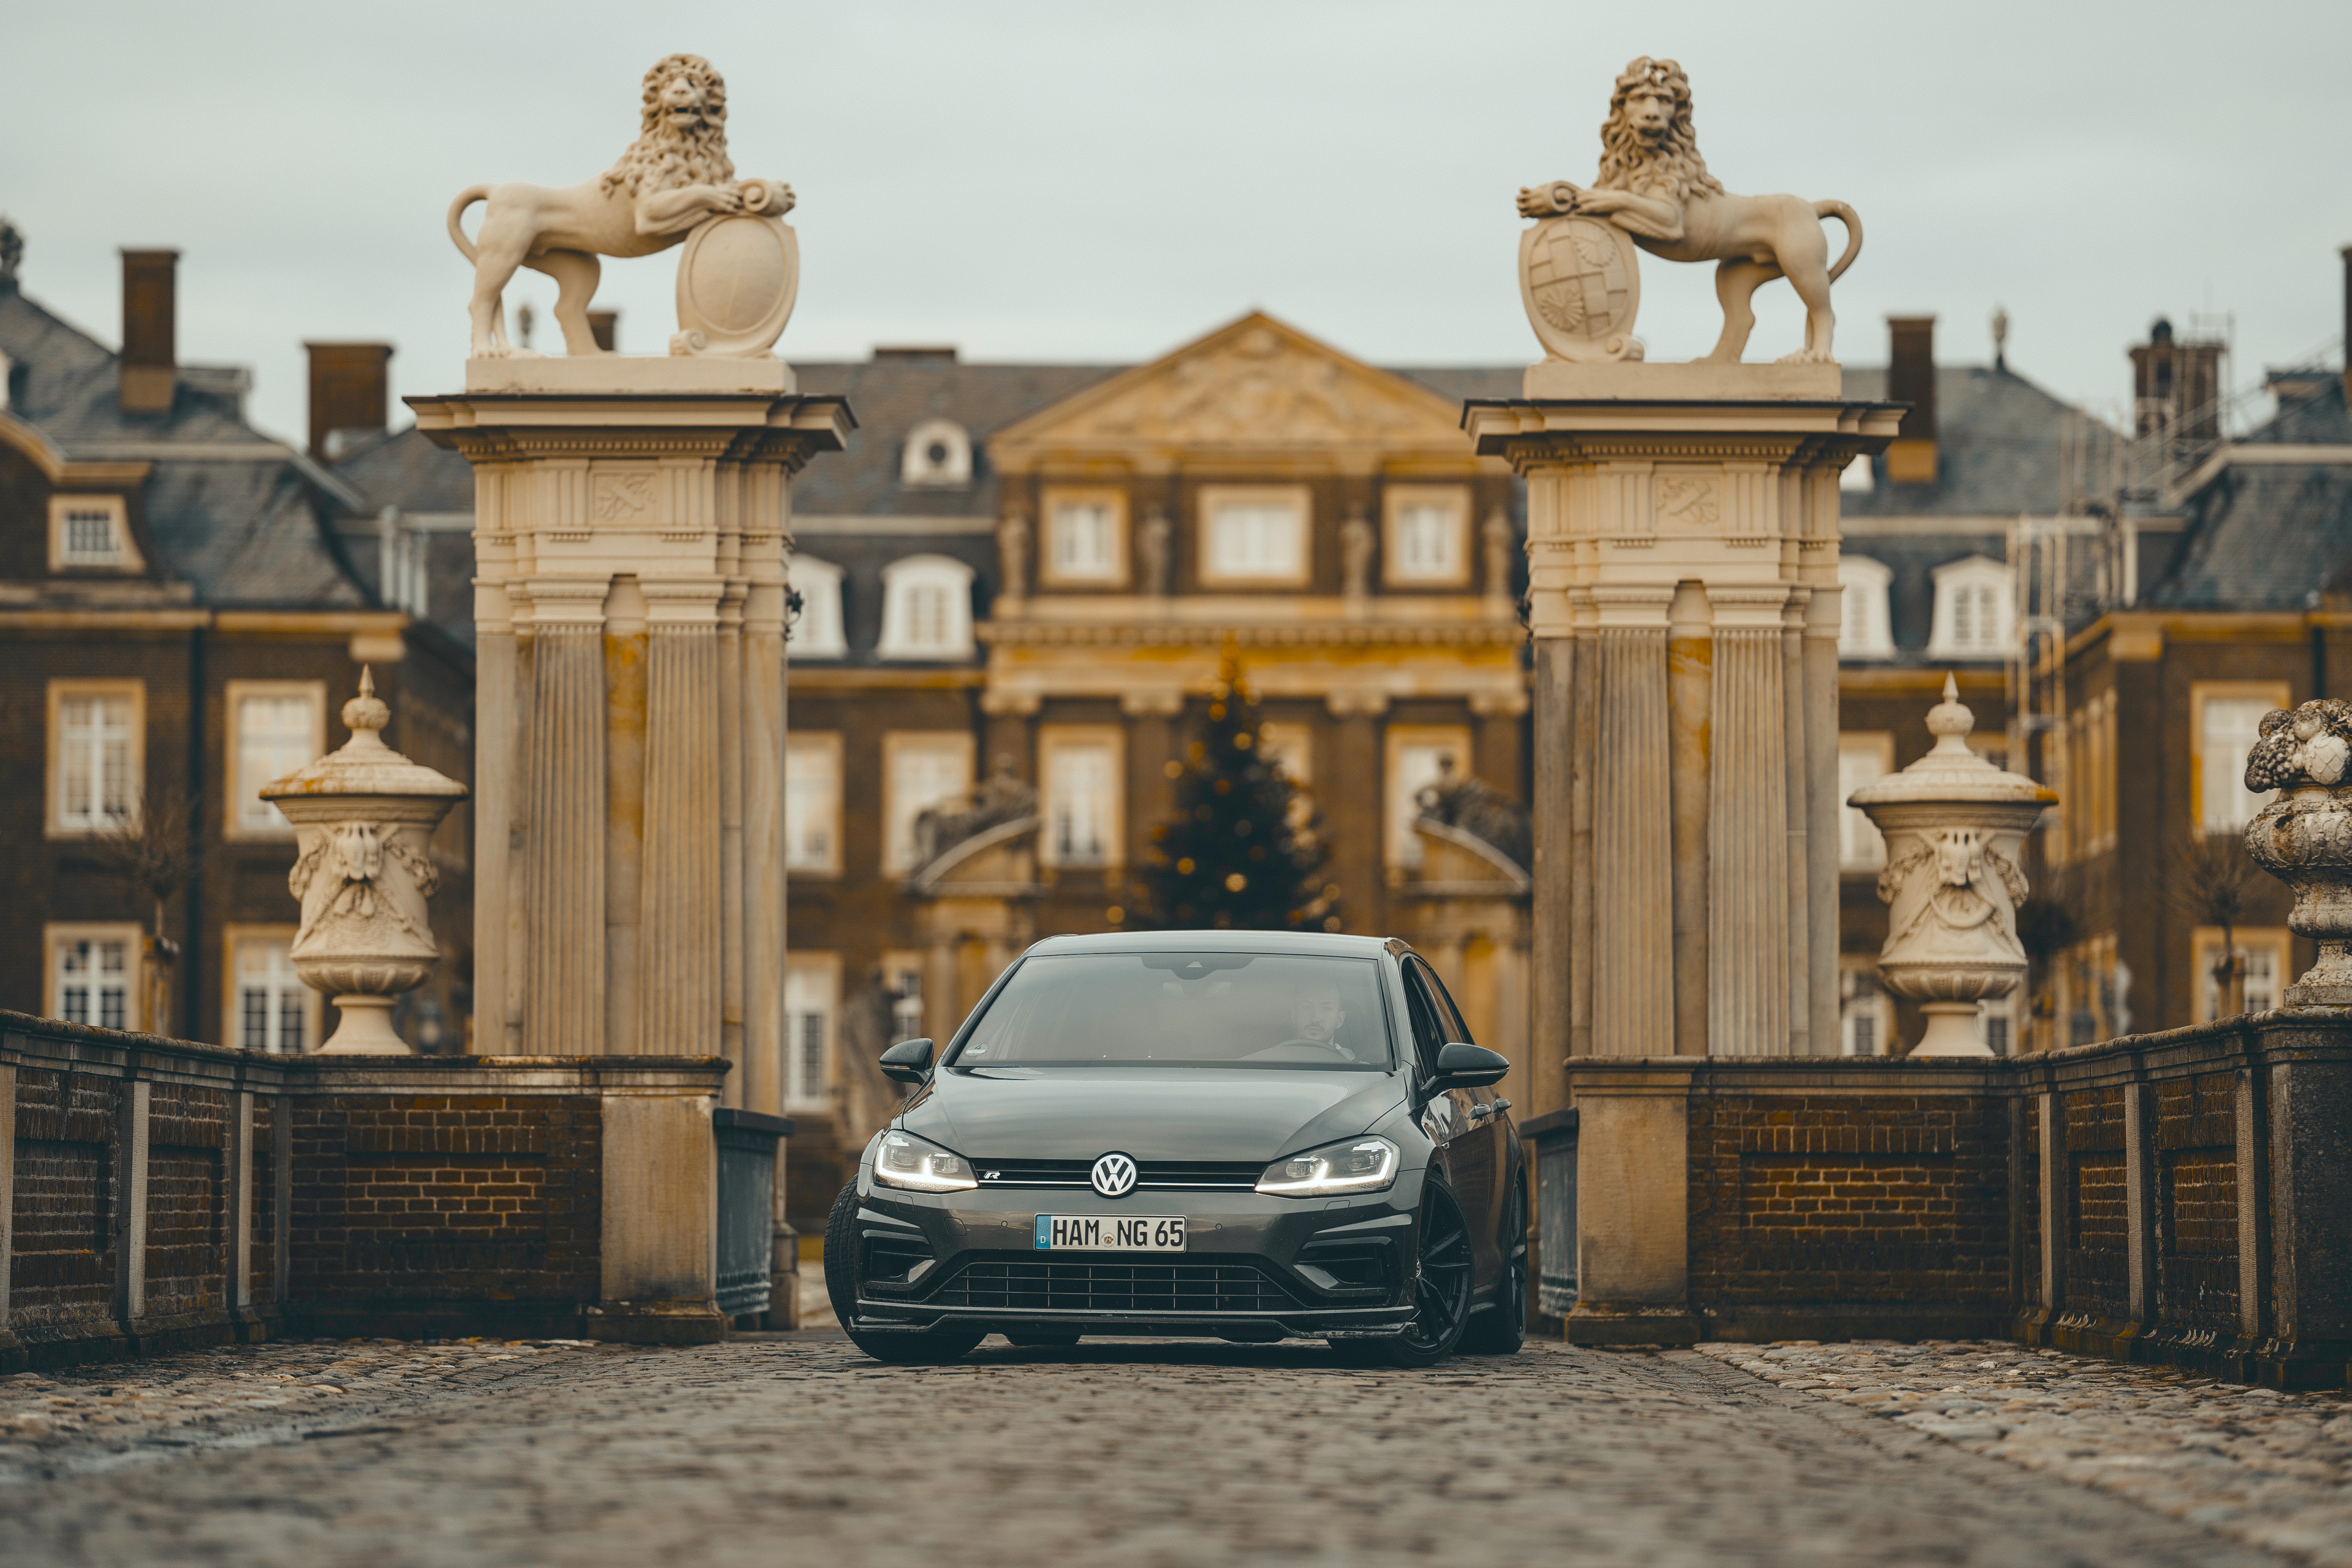 volkswagen, cars, car, grey, column, columns, palace